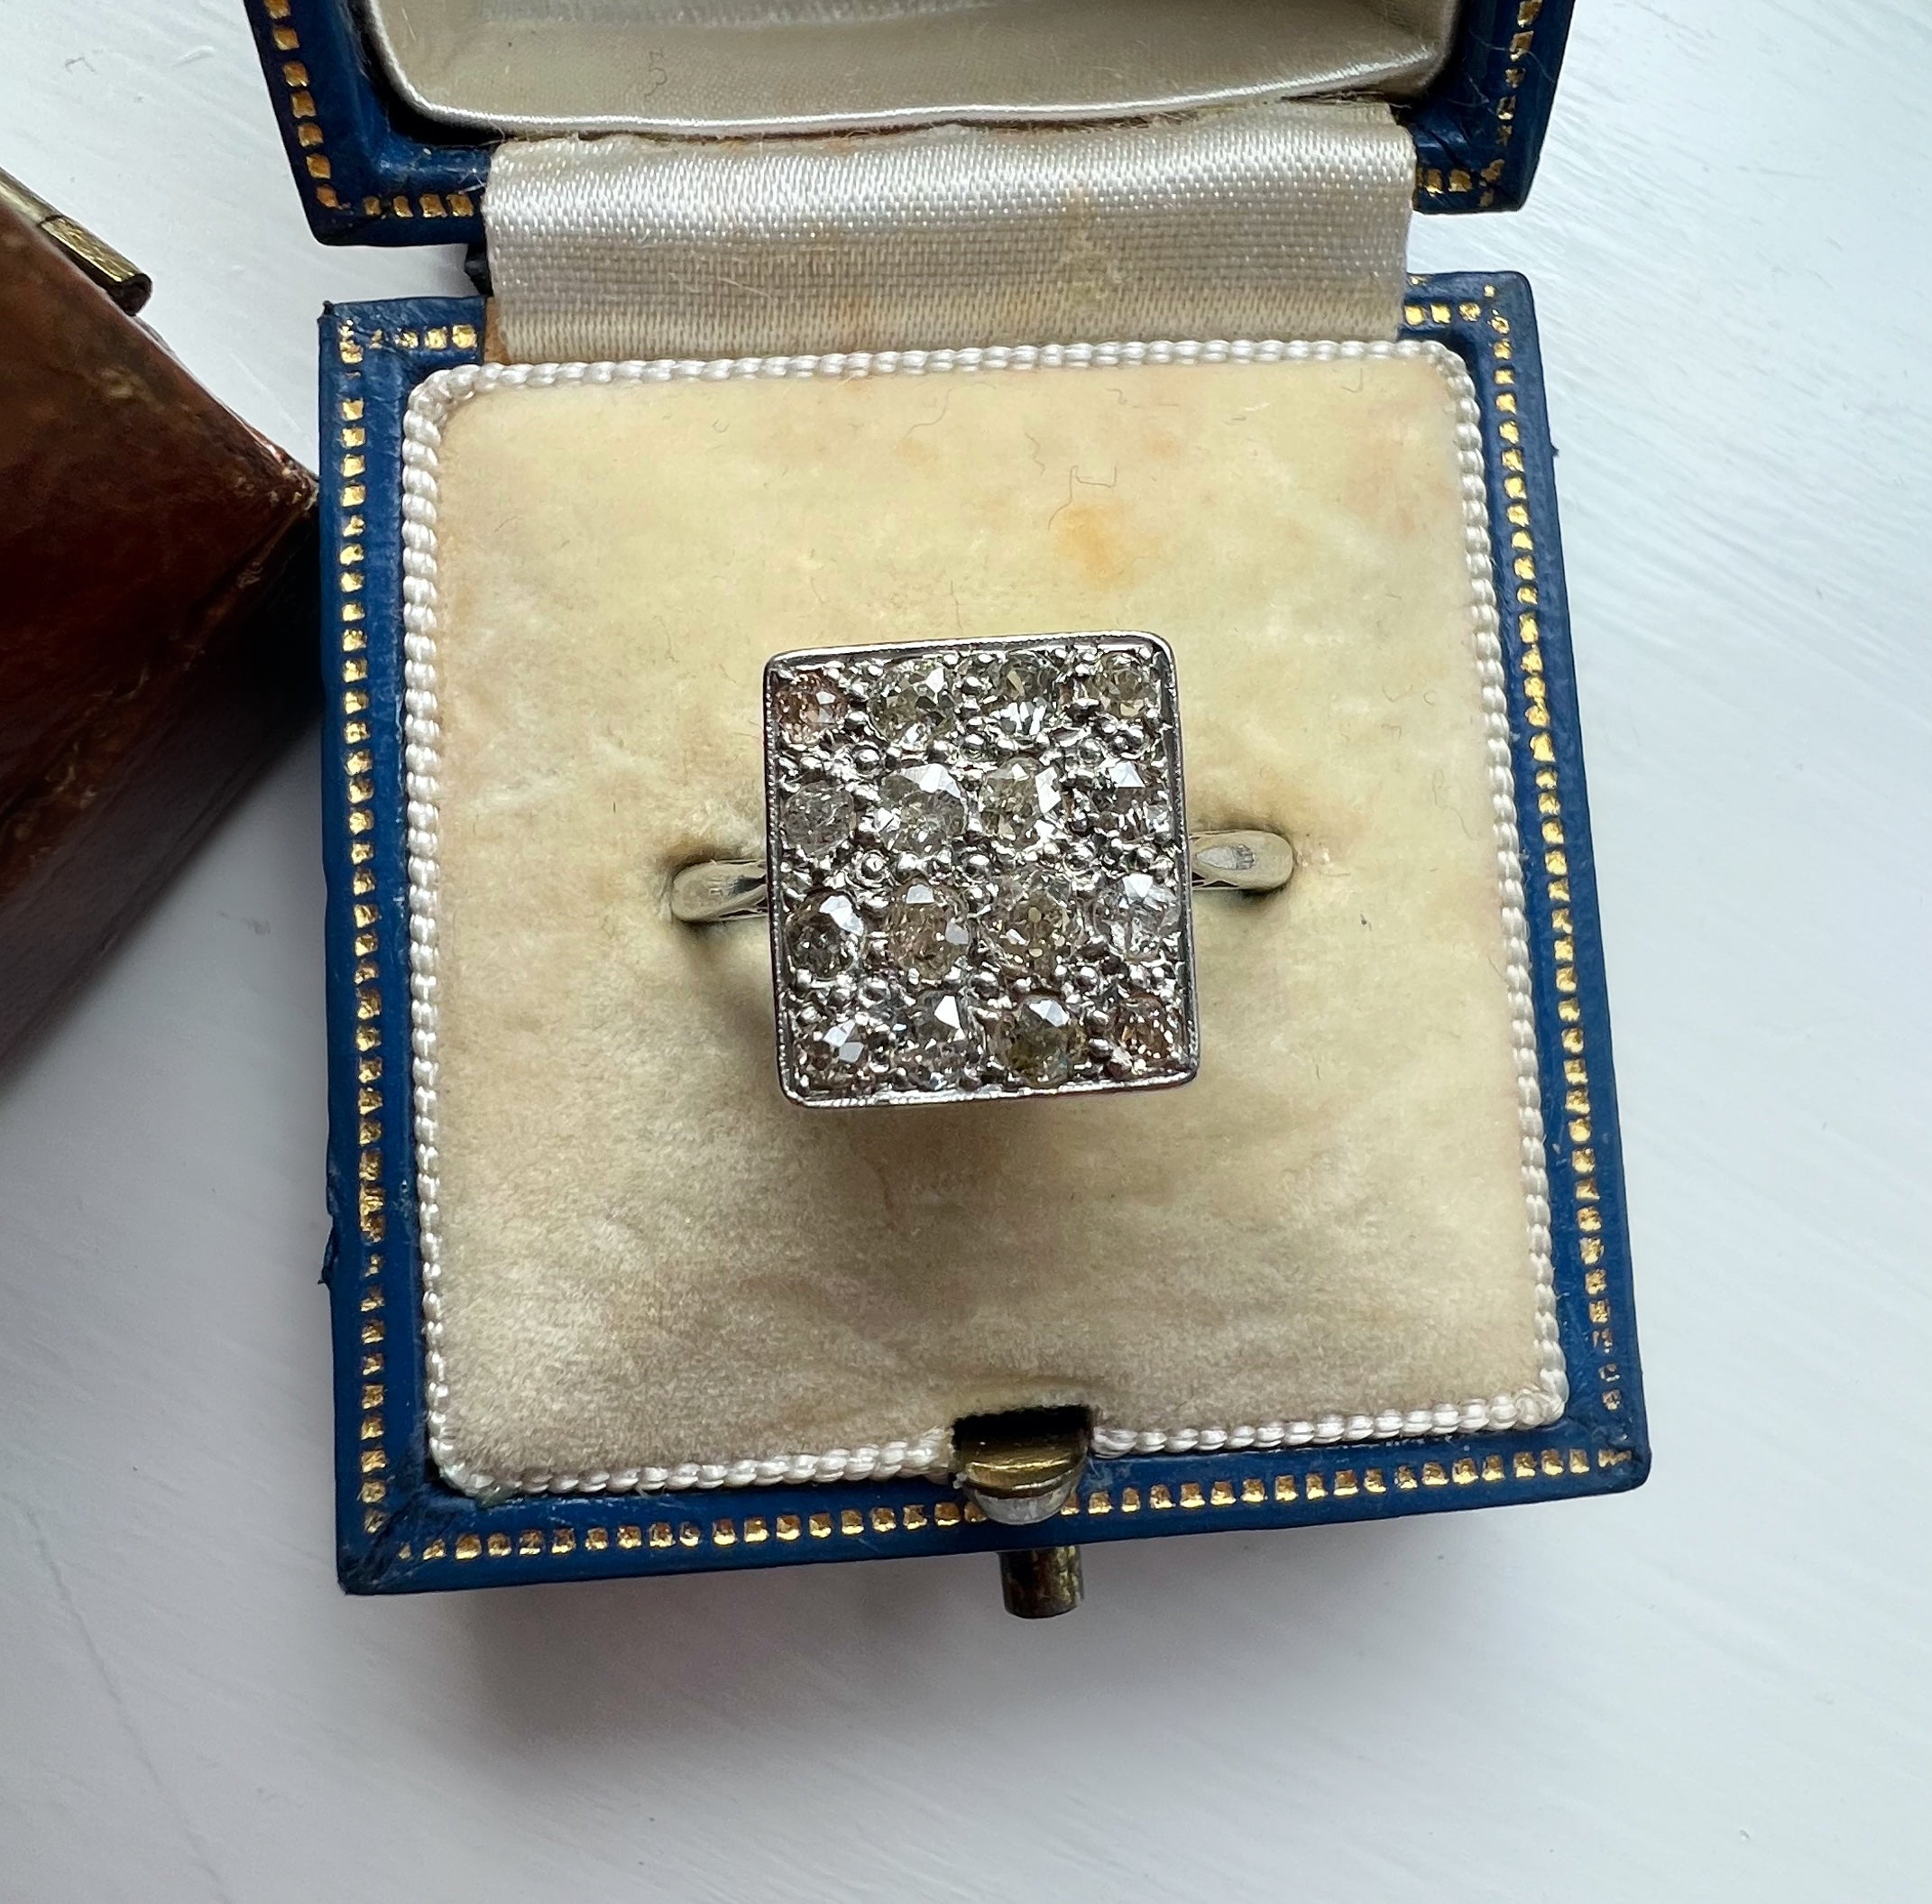 Art Deco Diamond Square Cluster Ring